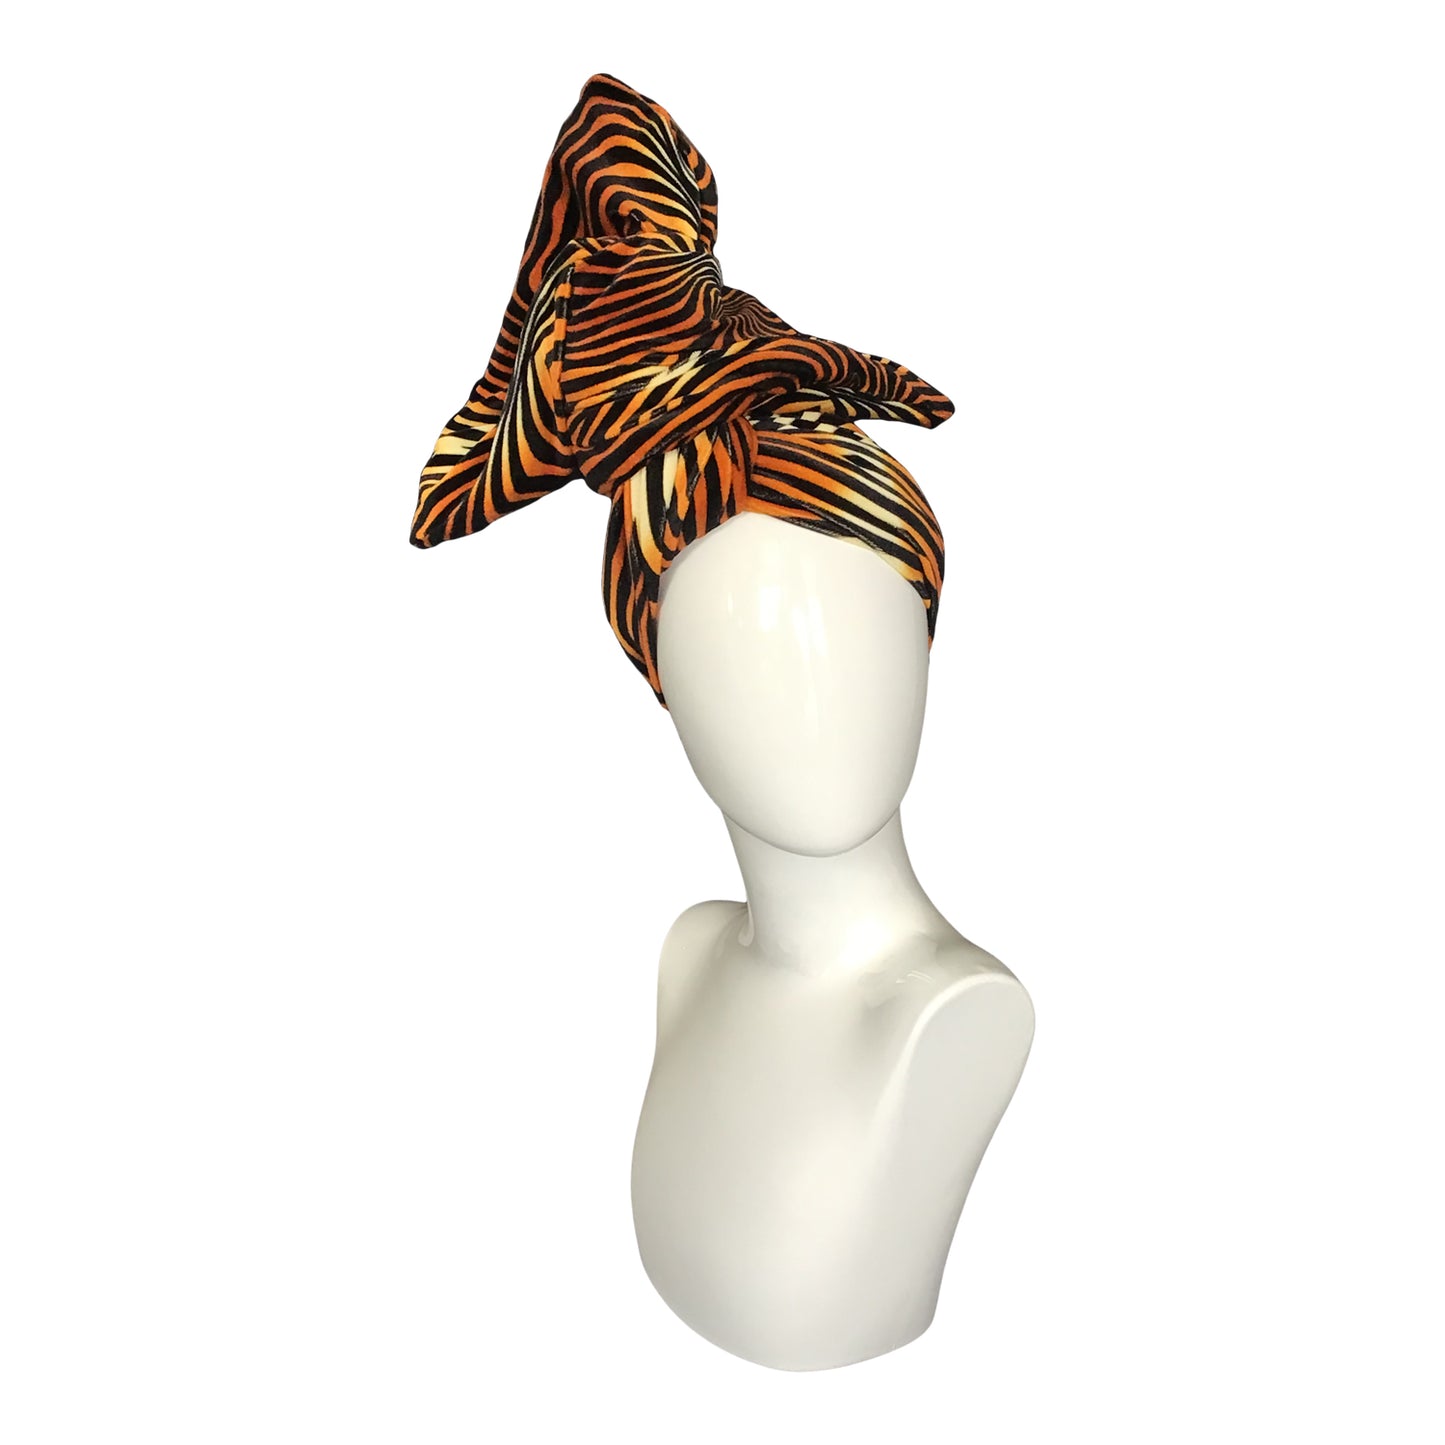 Velvet Twisturban® in "Okapi" pattern